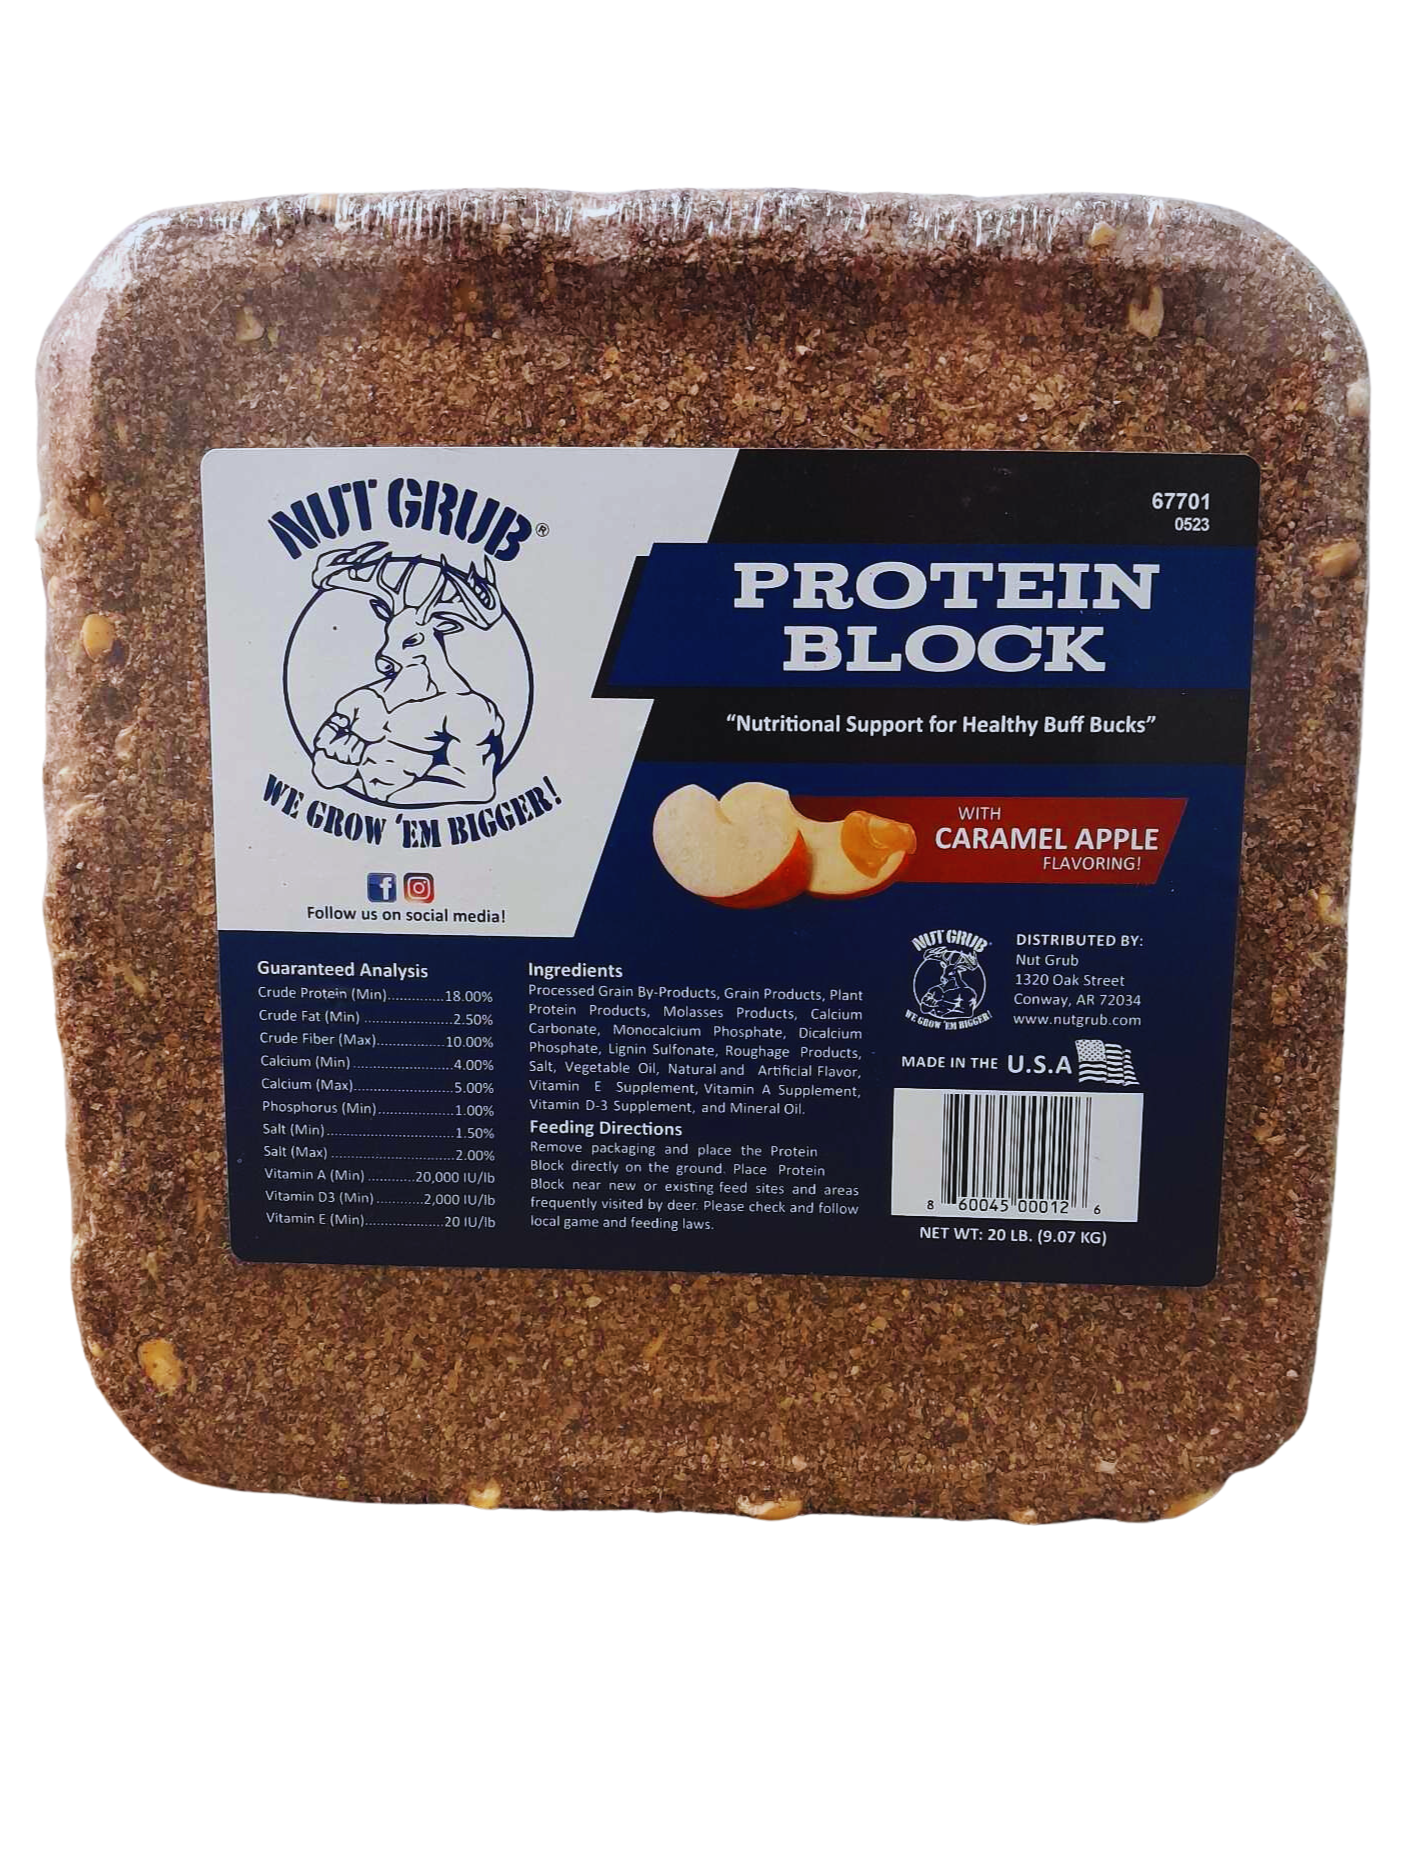 The Original Nut Grub Protein Block